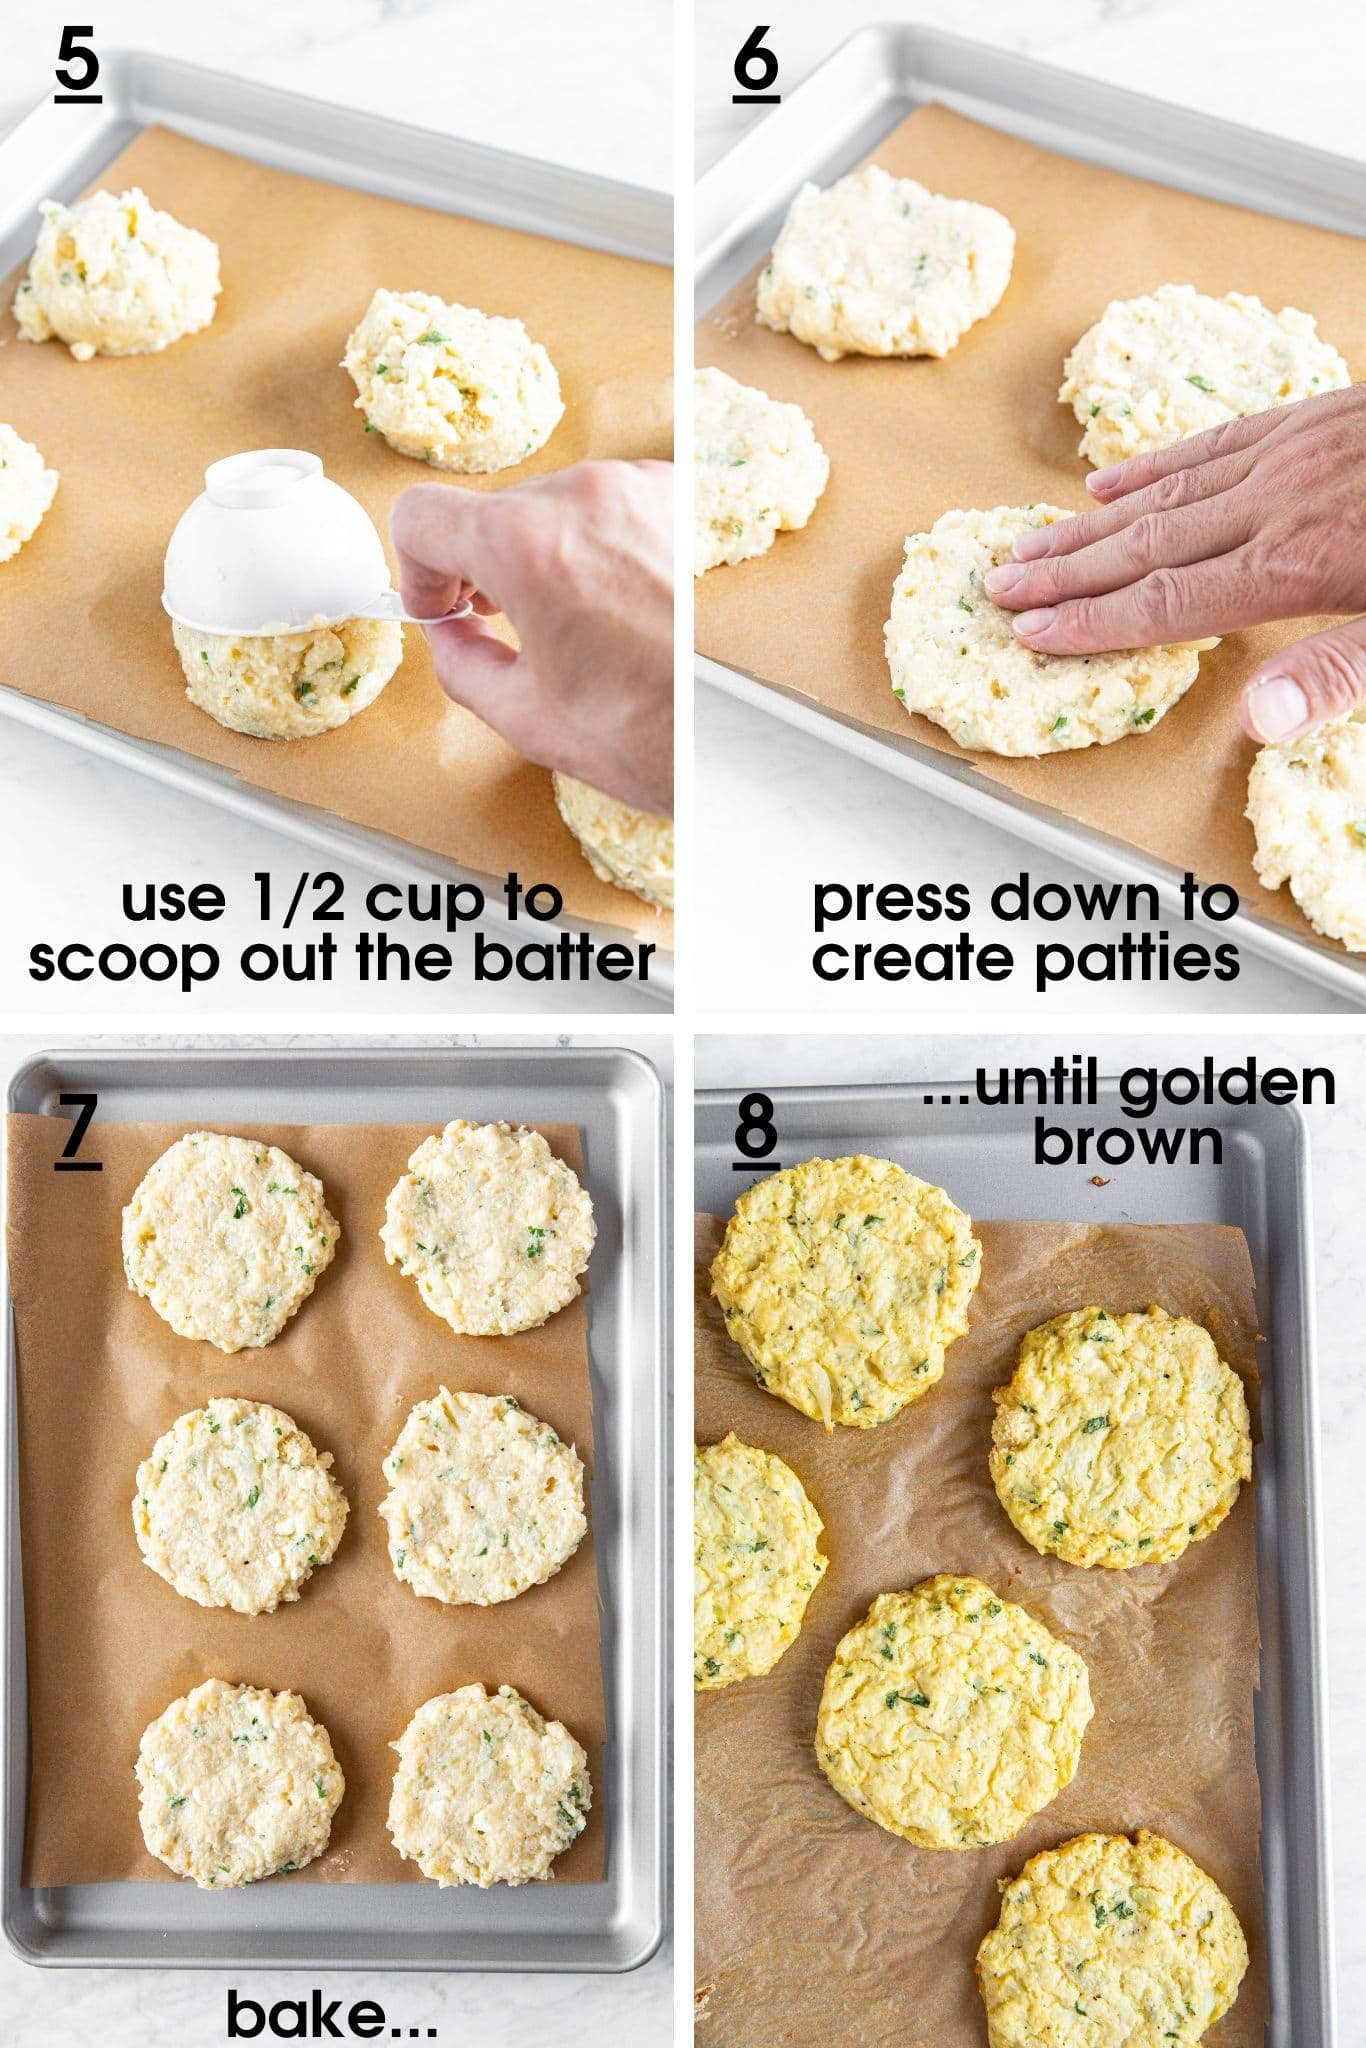 How to prep and bake GF & Paleo Cauliflower Patties from verygoodcook.com